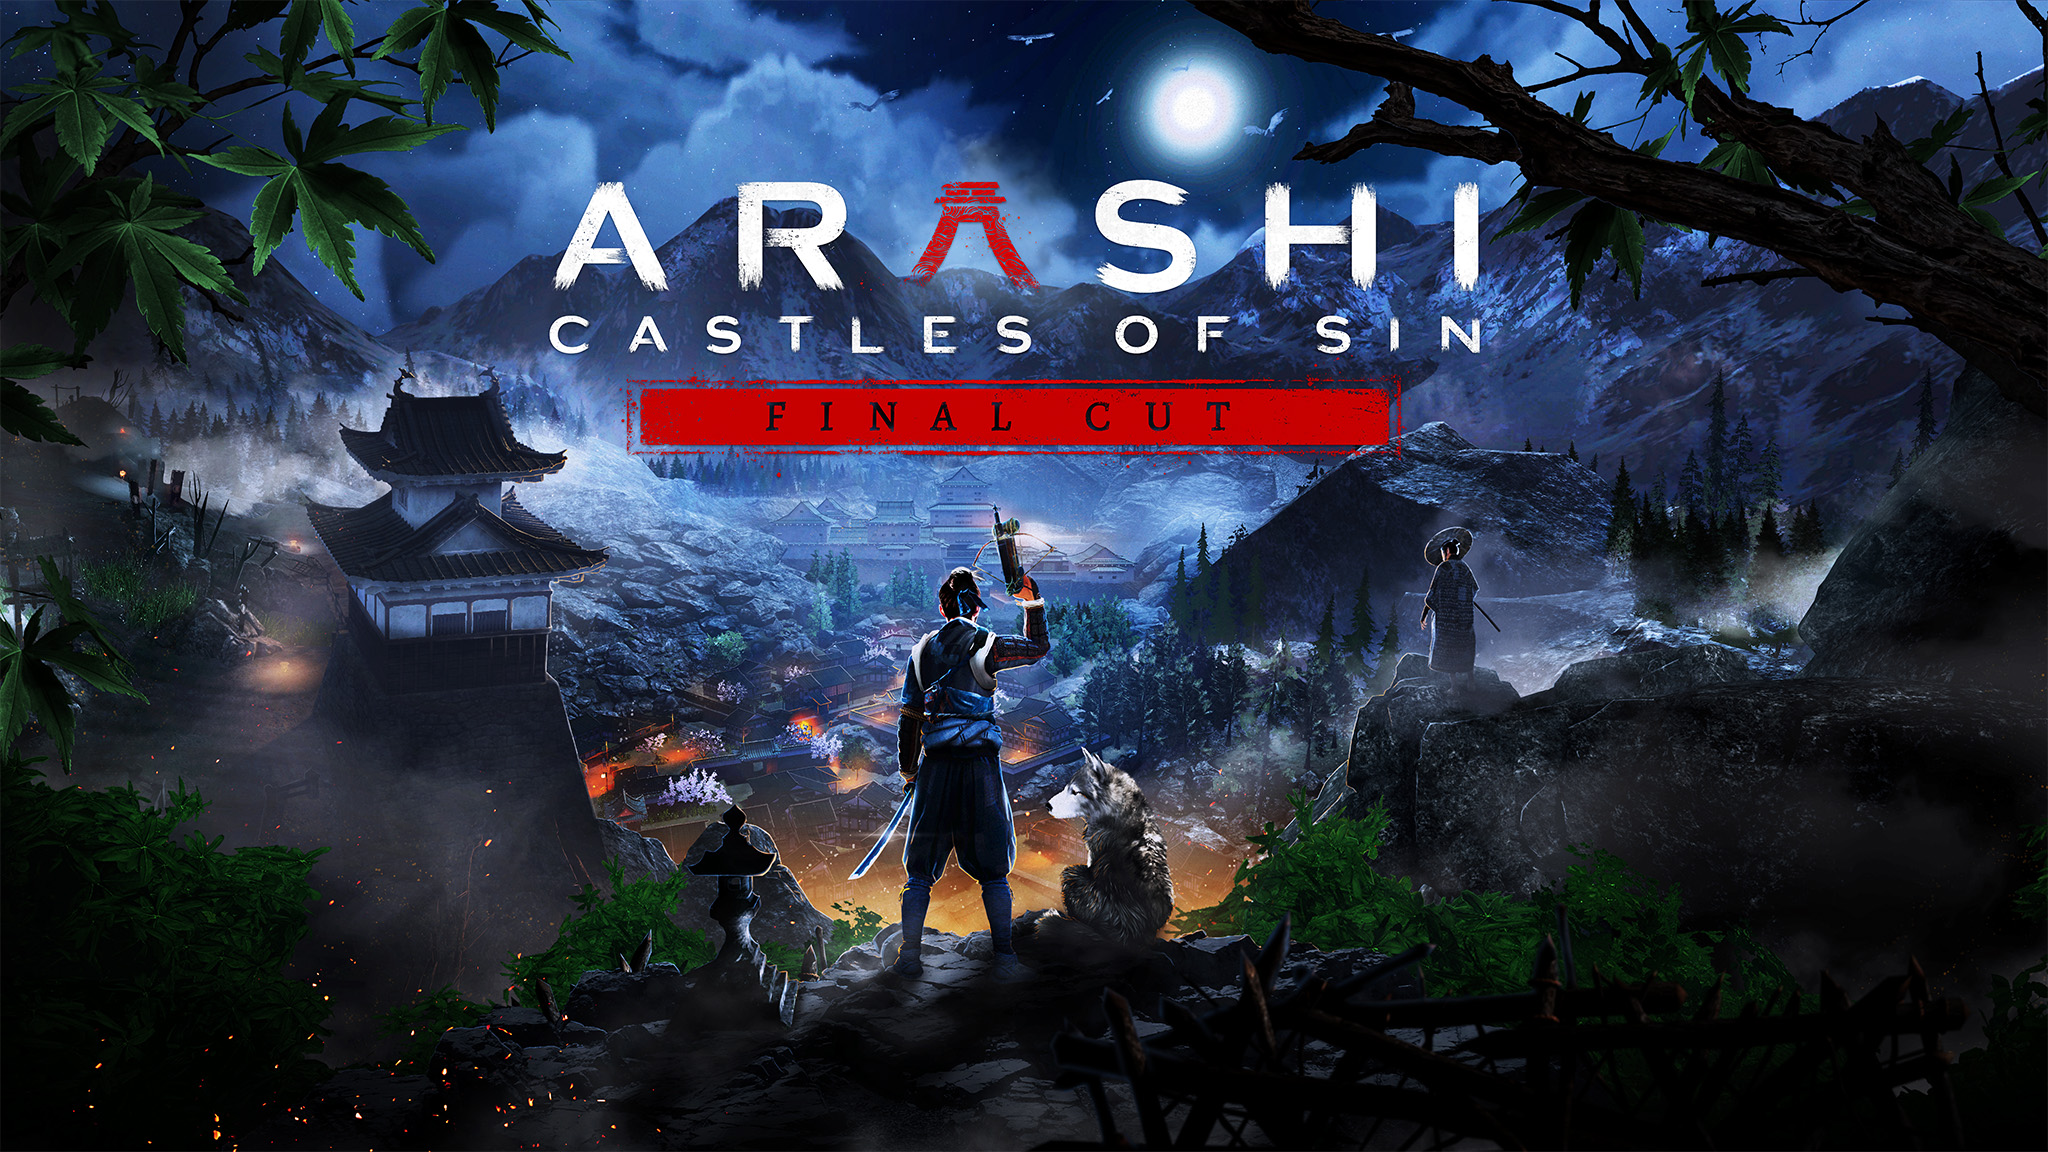 Arashi: Castles of Sin Final Cut official artwork